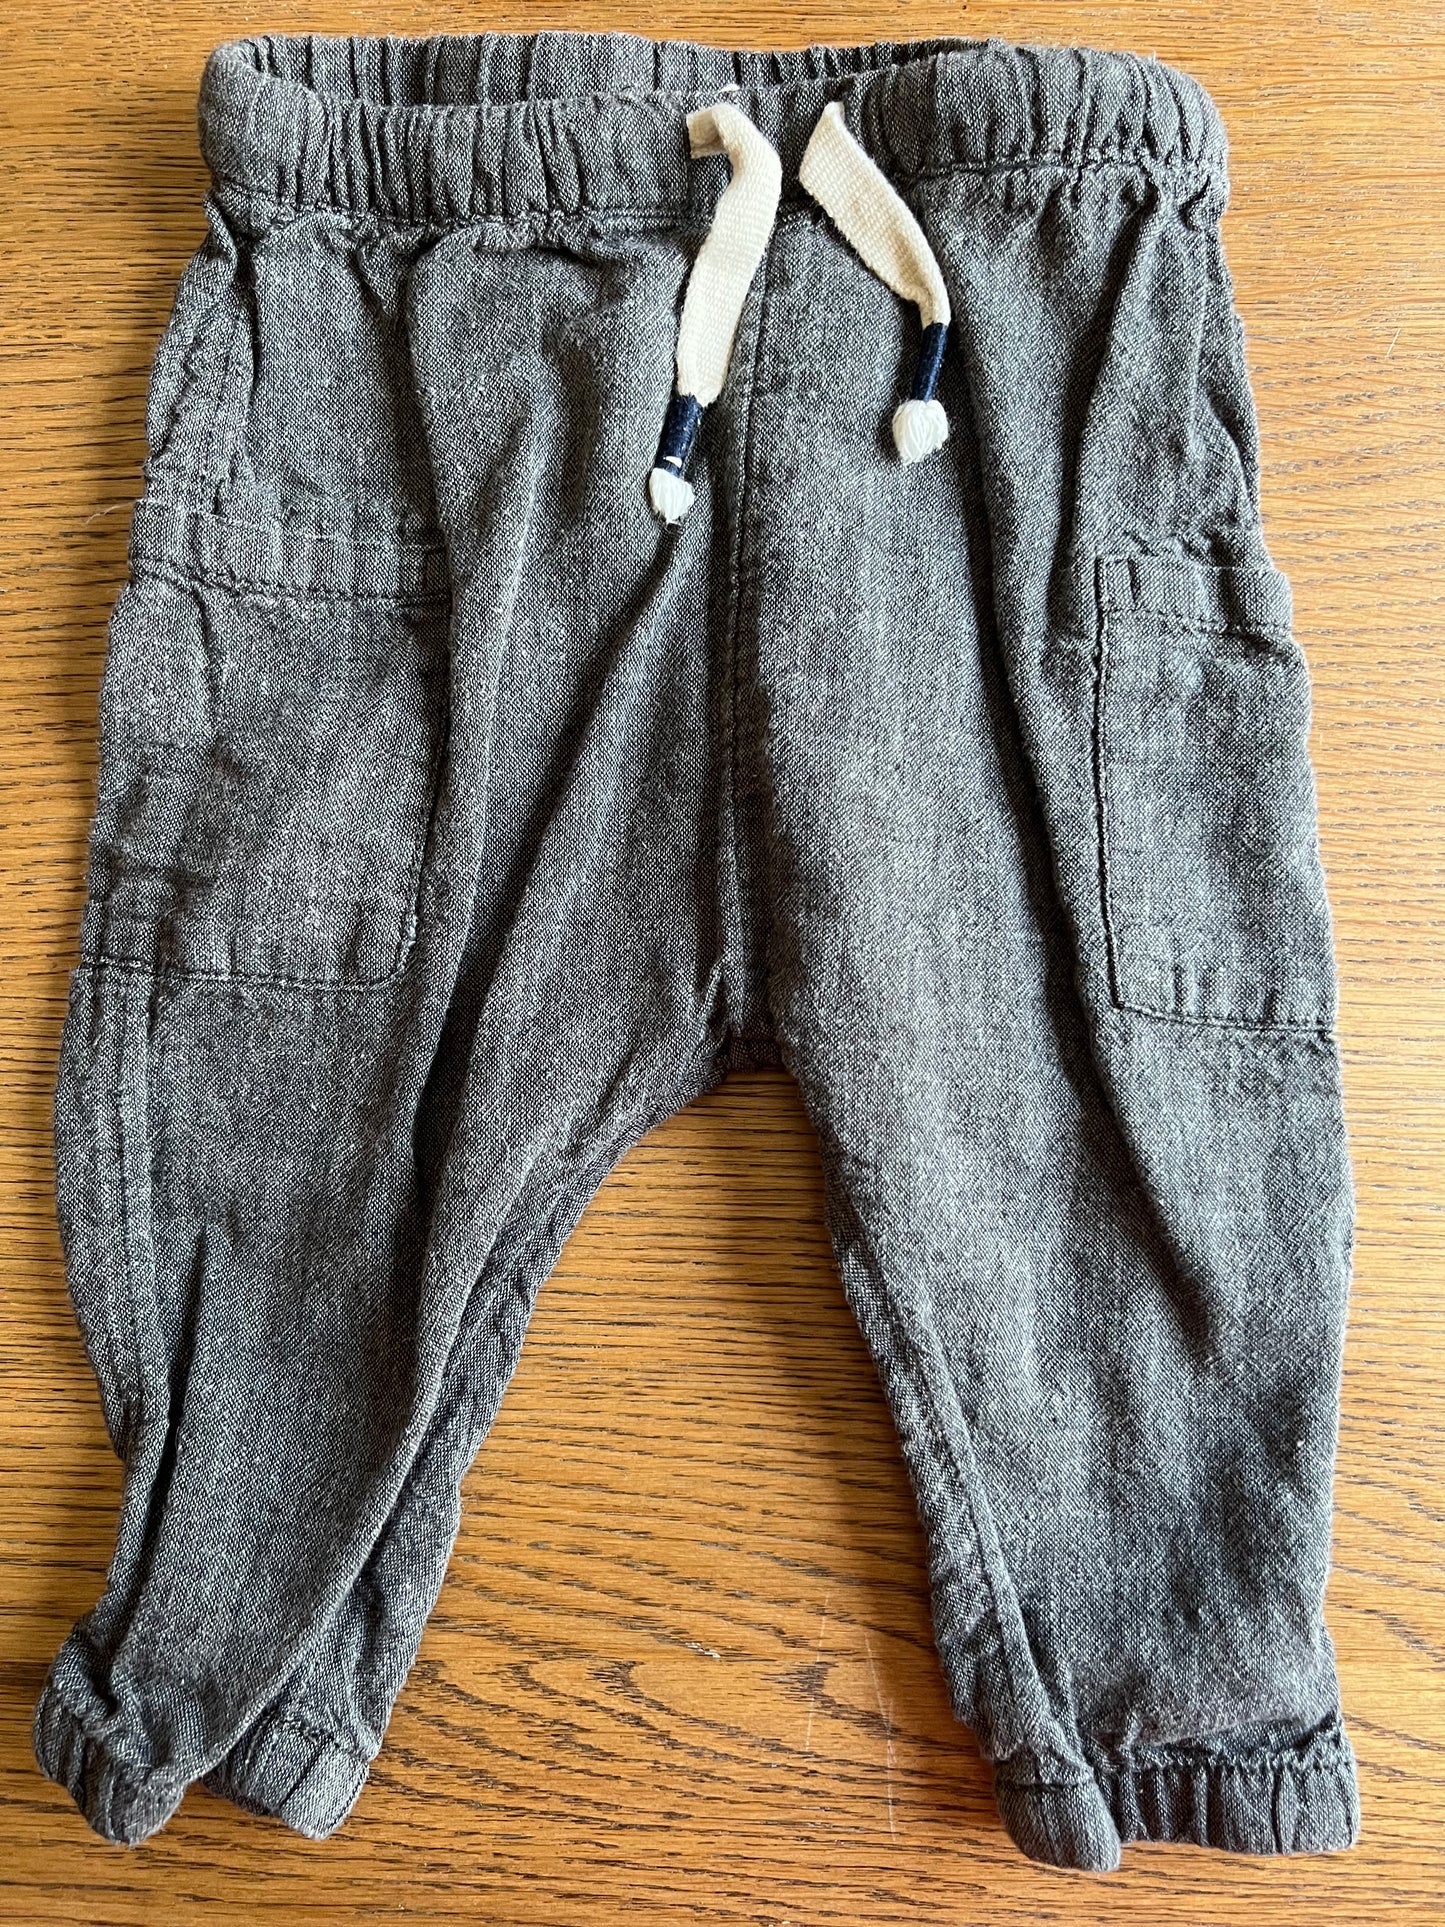 H&M dark gray linen drawstring pants size 4-6 months